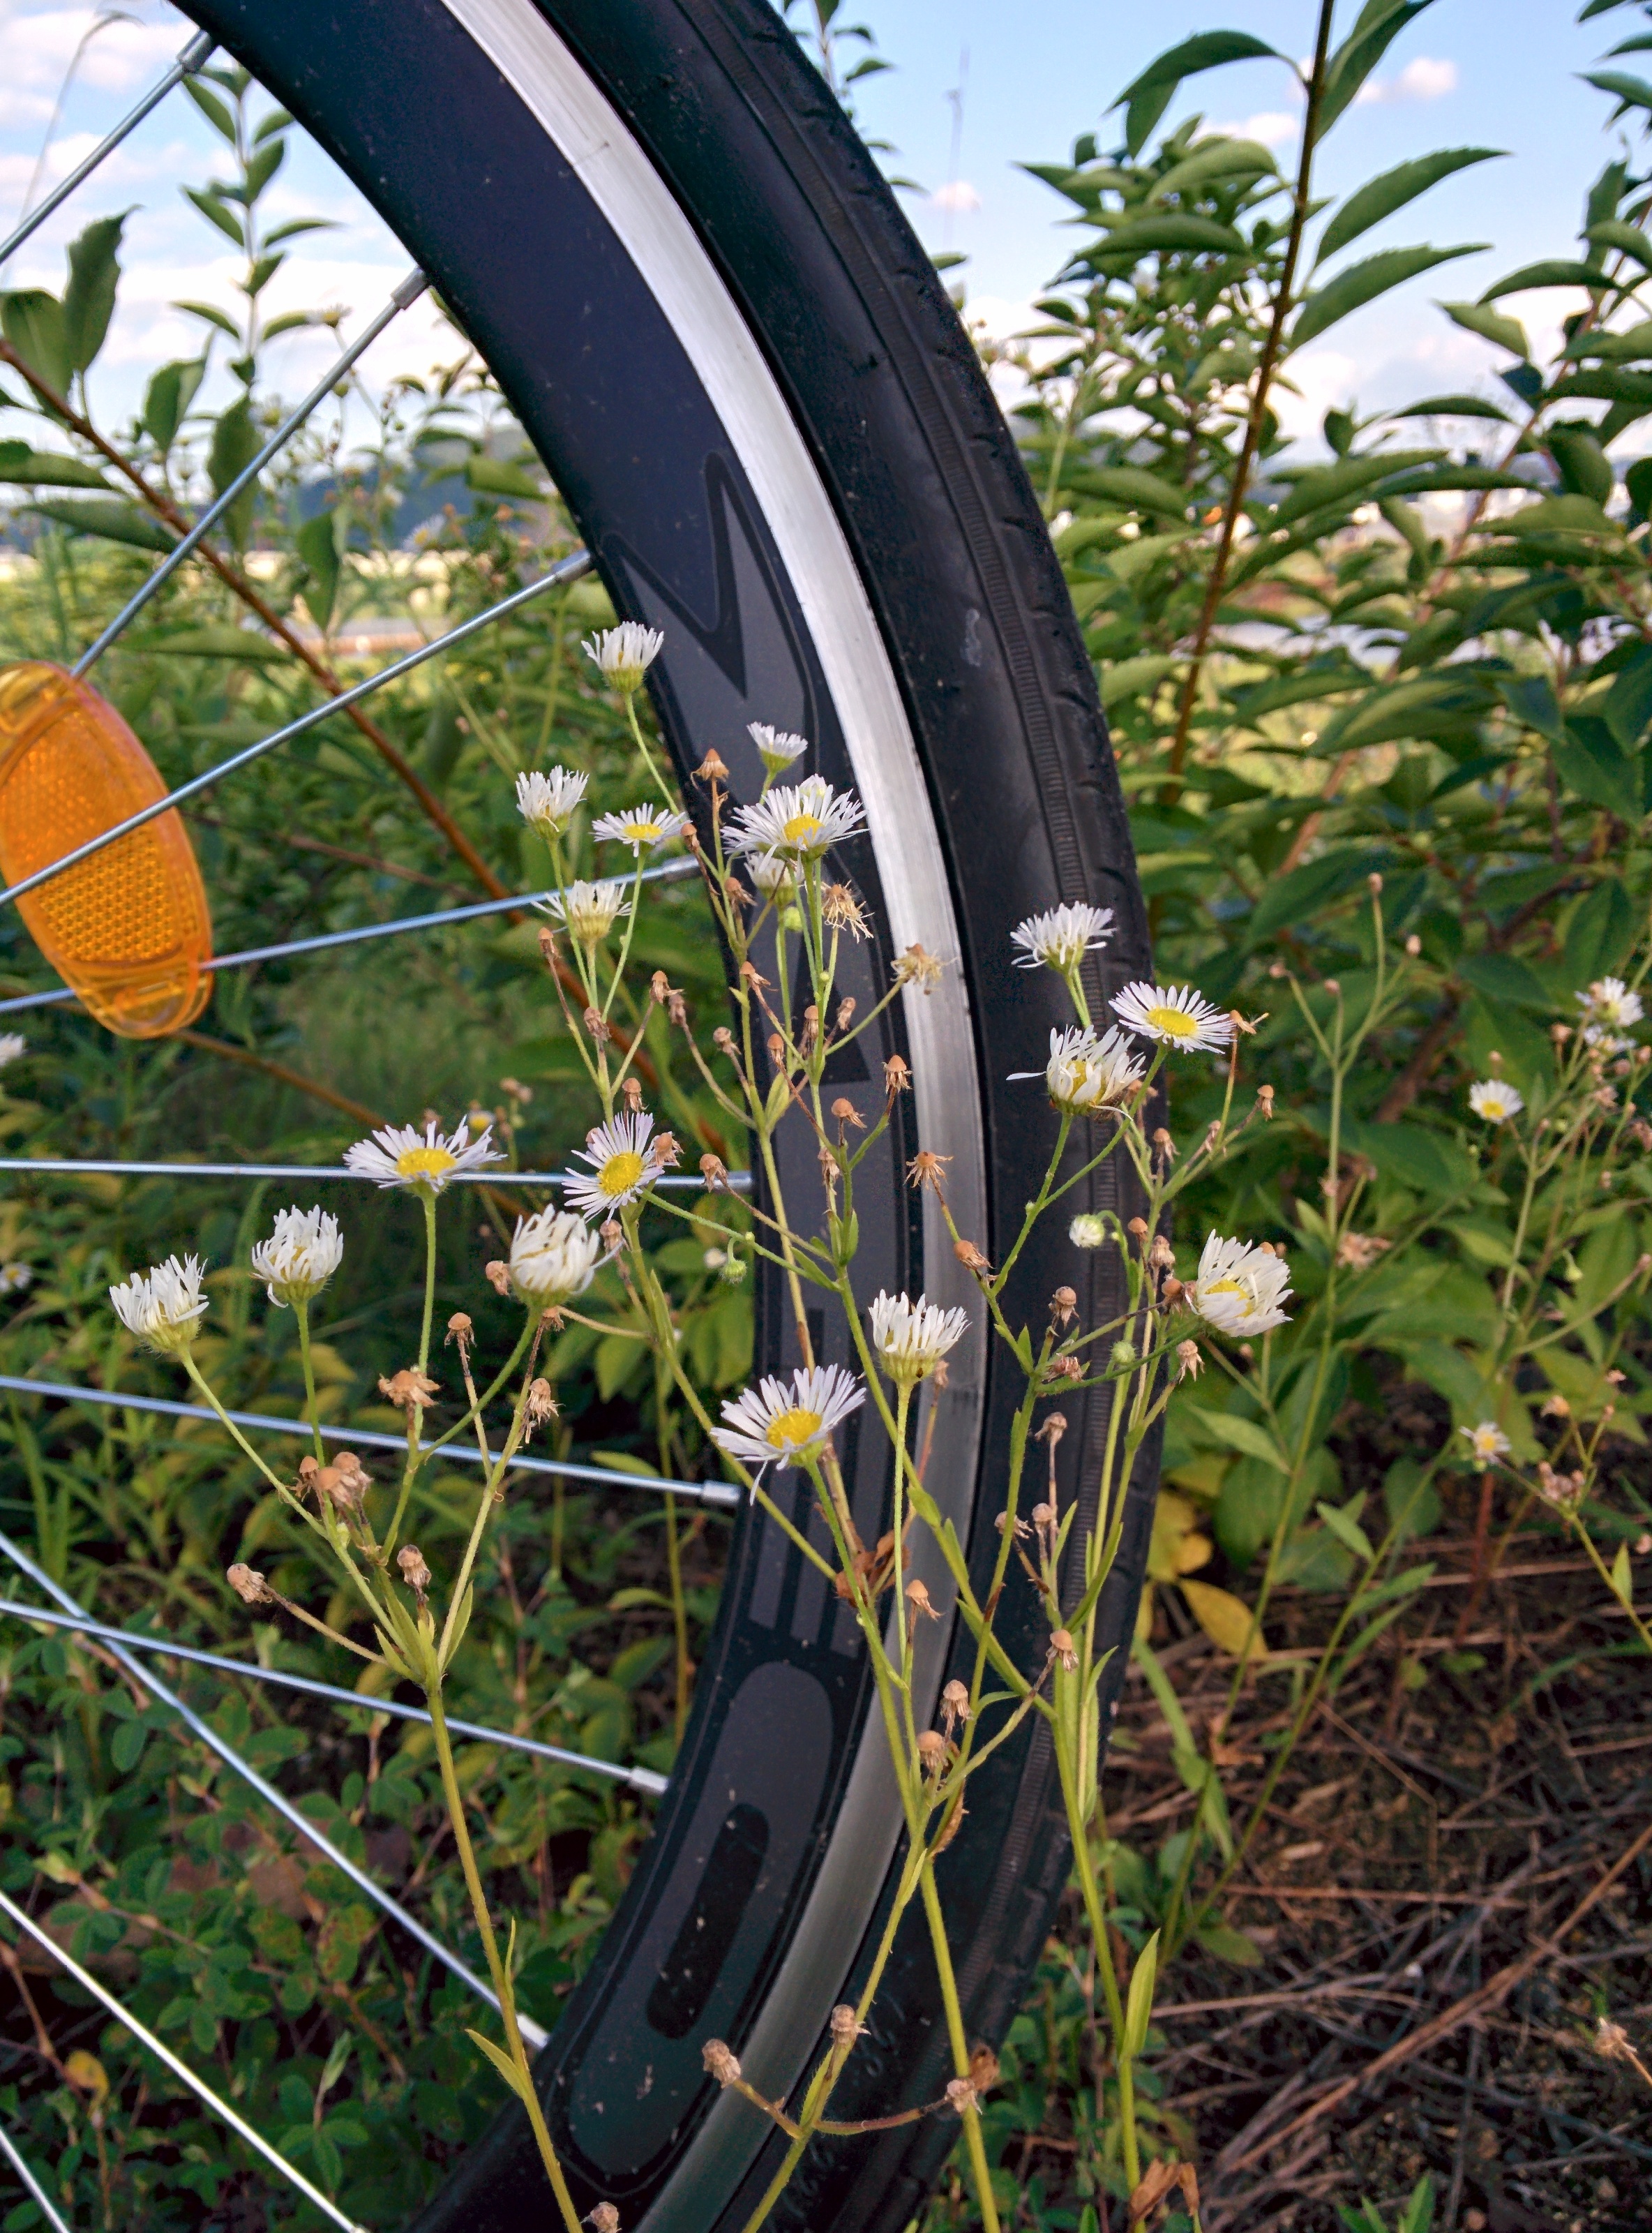 IMG_20150826_172837.jpg 자전거 바퀴와 개망초 꽃